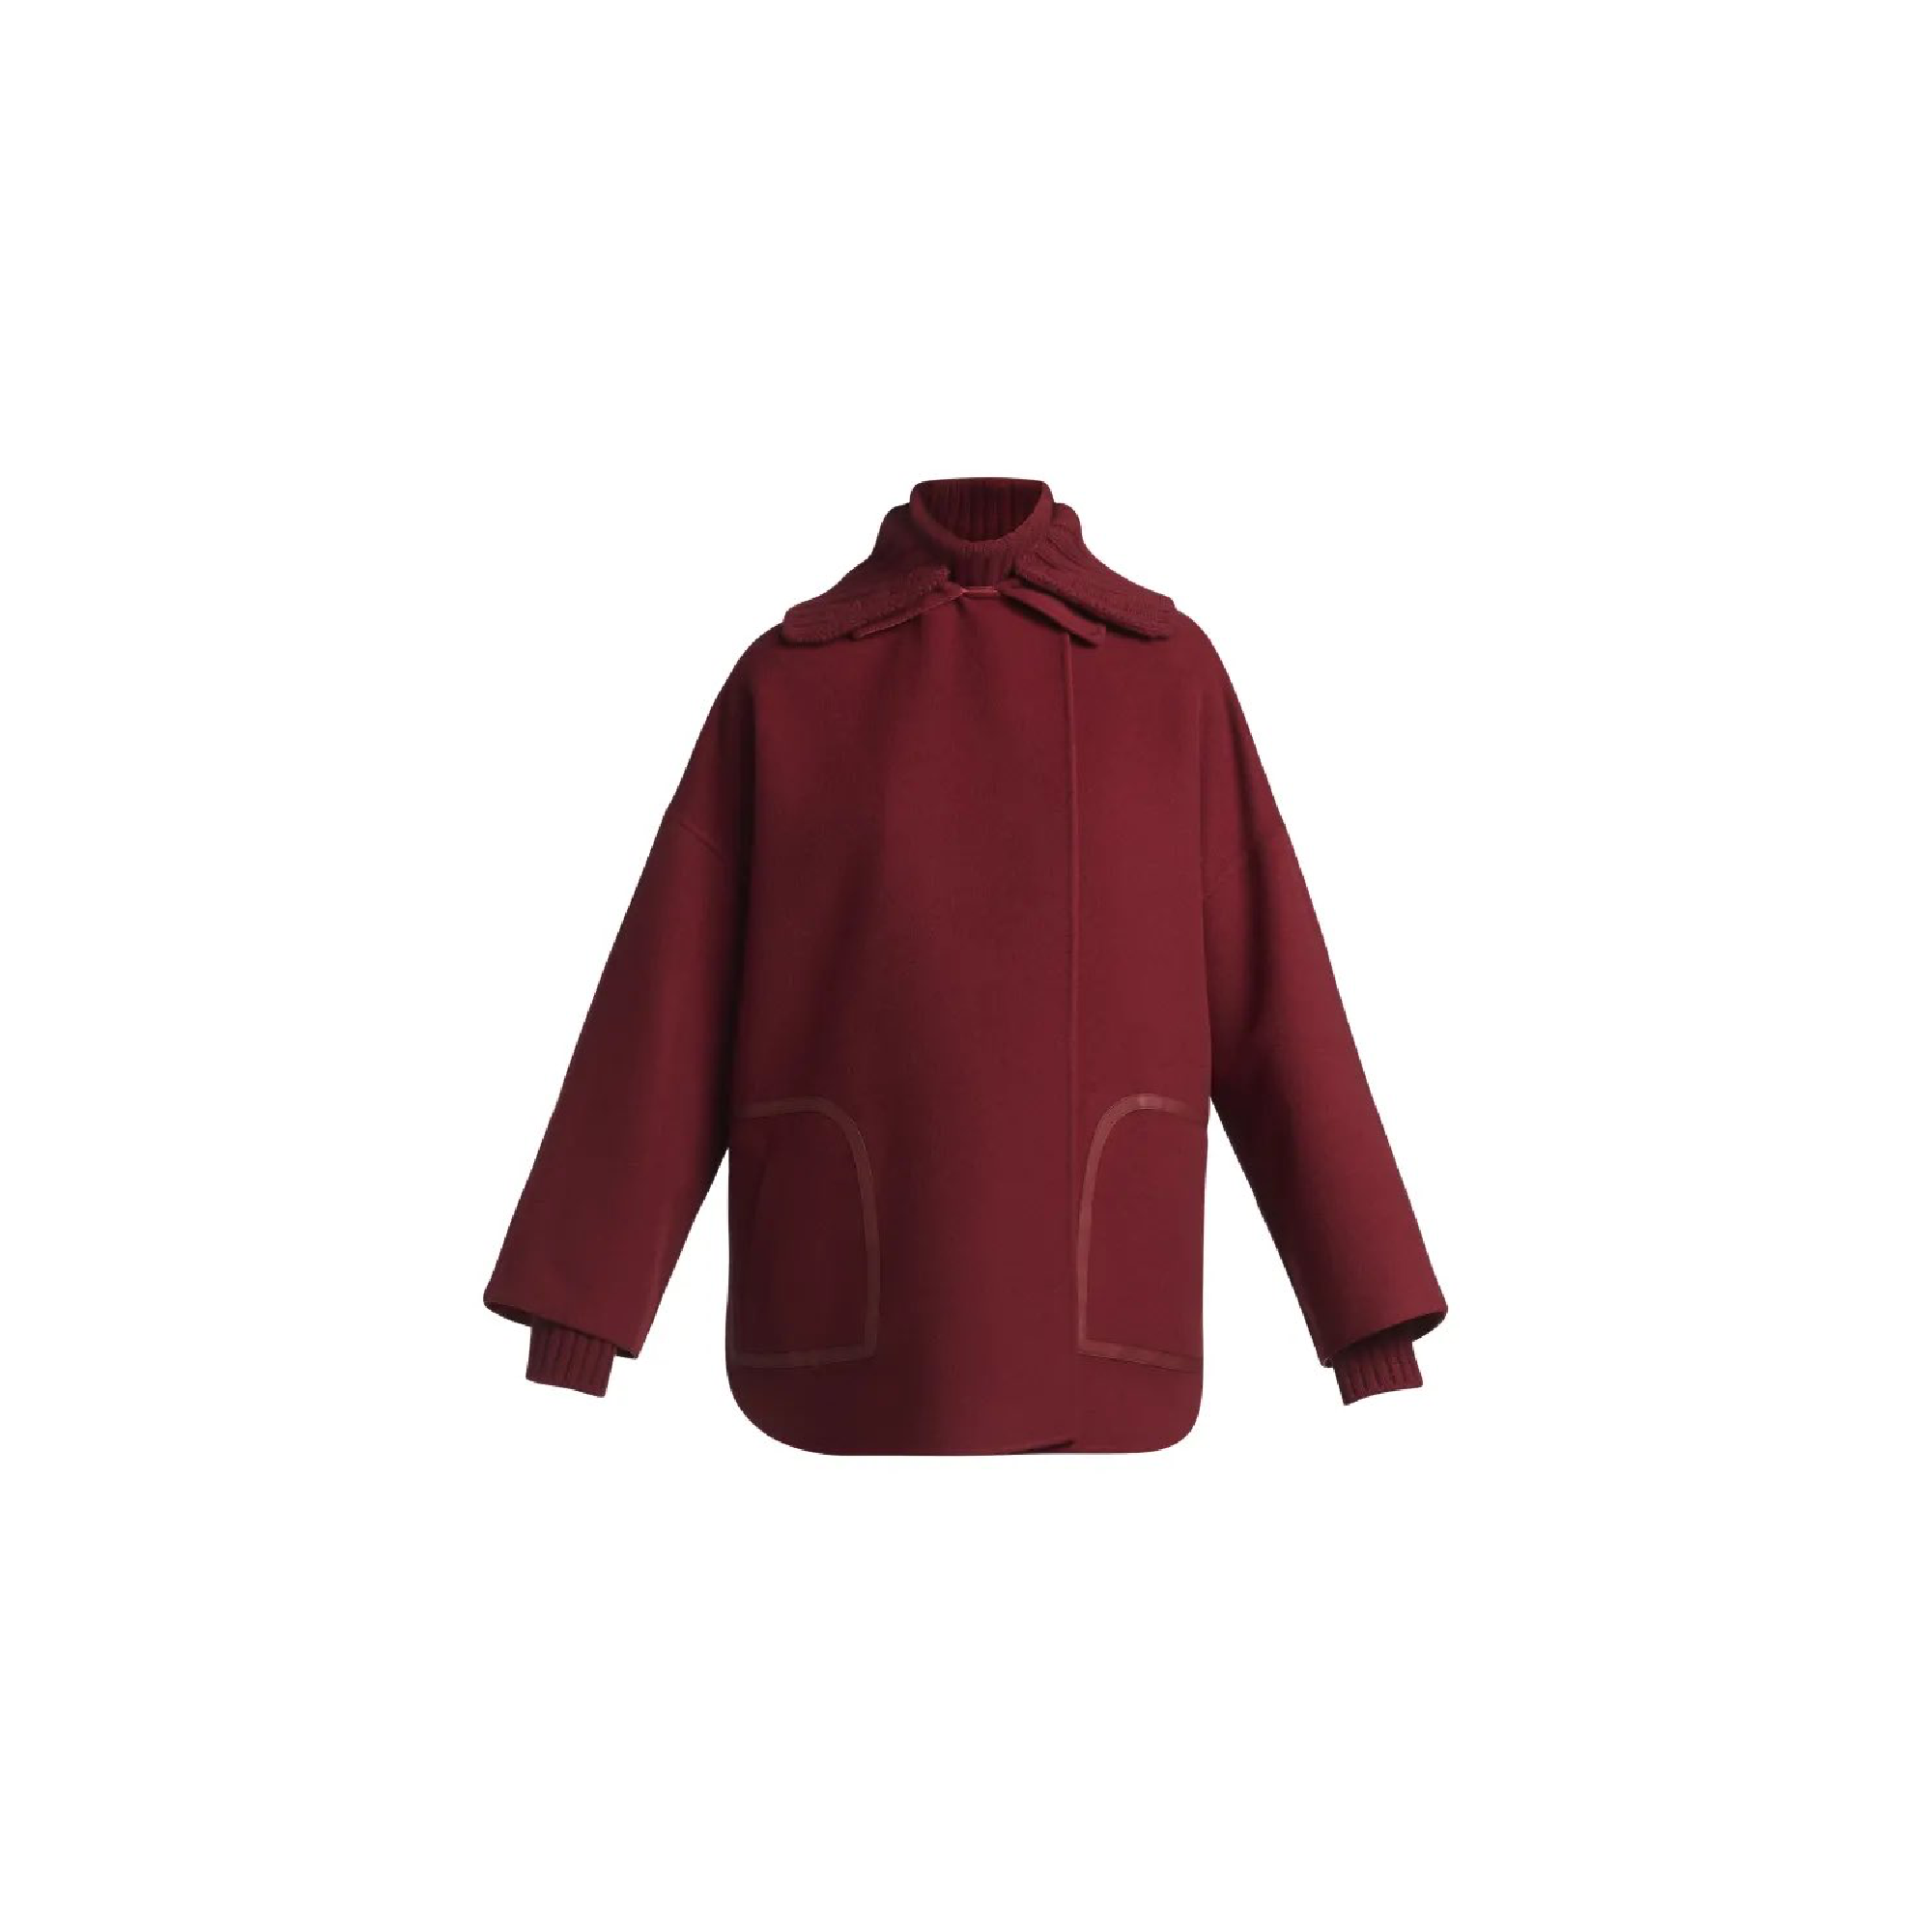 Loro Piana Red Jacket Flash Sales | website.jkuat.ac.ke